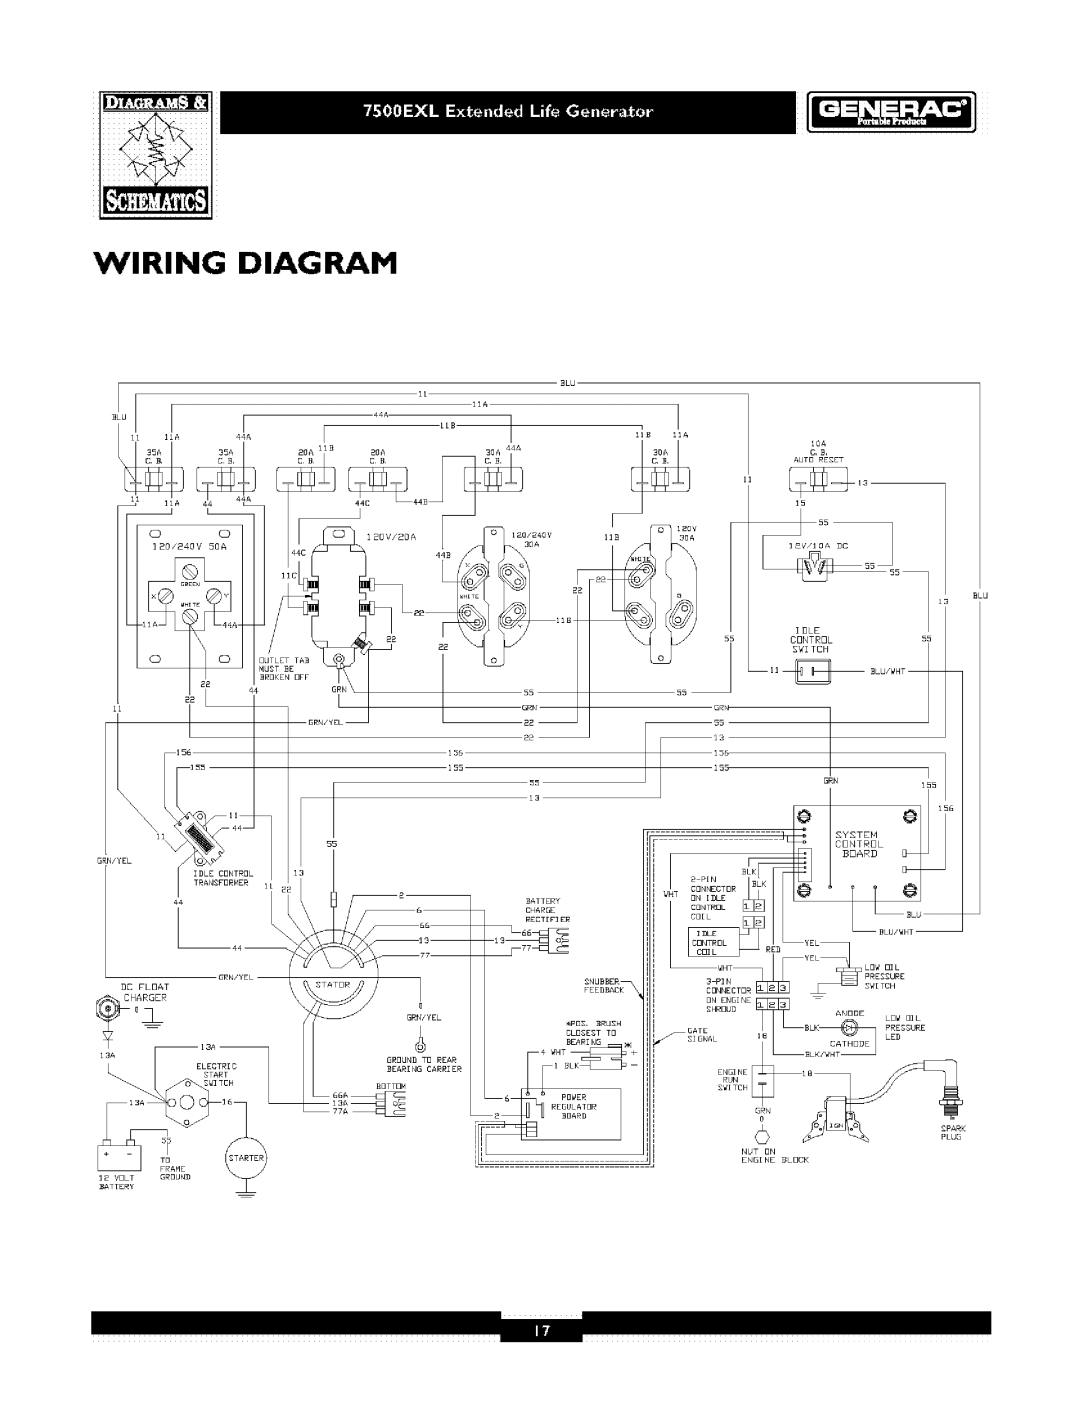 Generac 1019-3 owner manual Wiring Diagram, IOA C B AUTa RESET, Idle Cdntrdl Switch, 156 155 DC FLOAT 